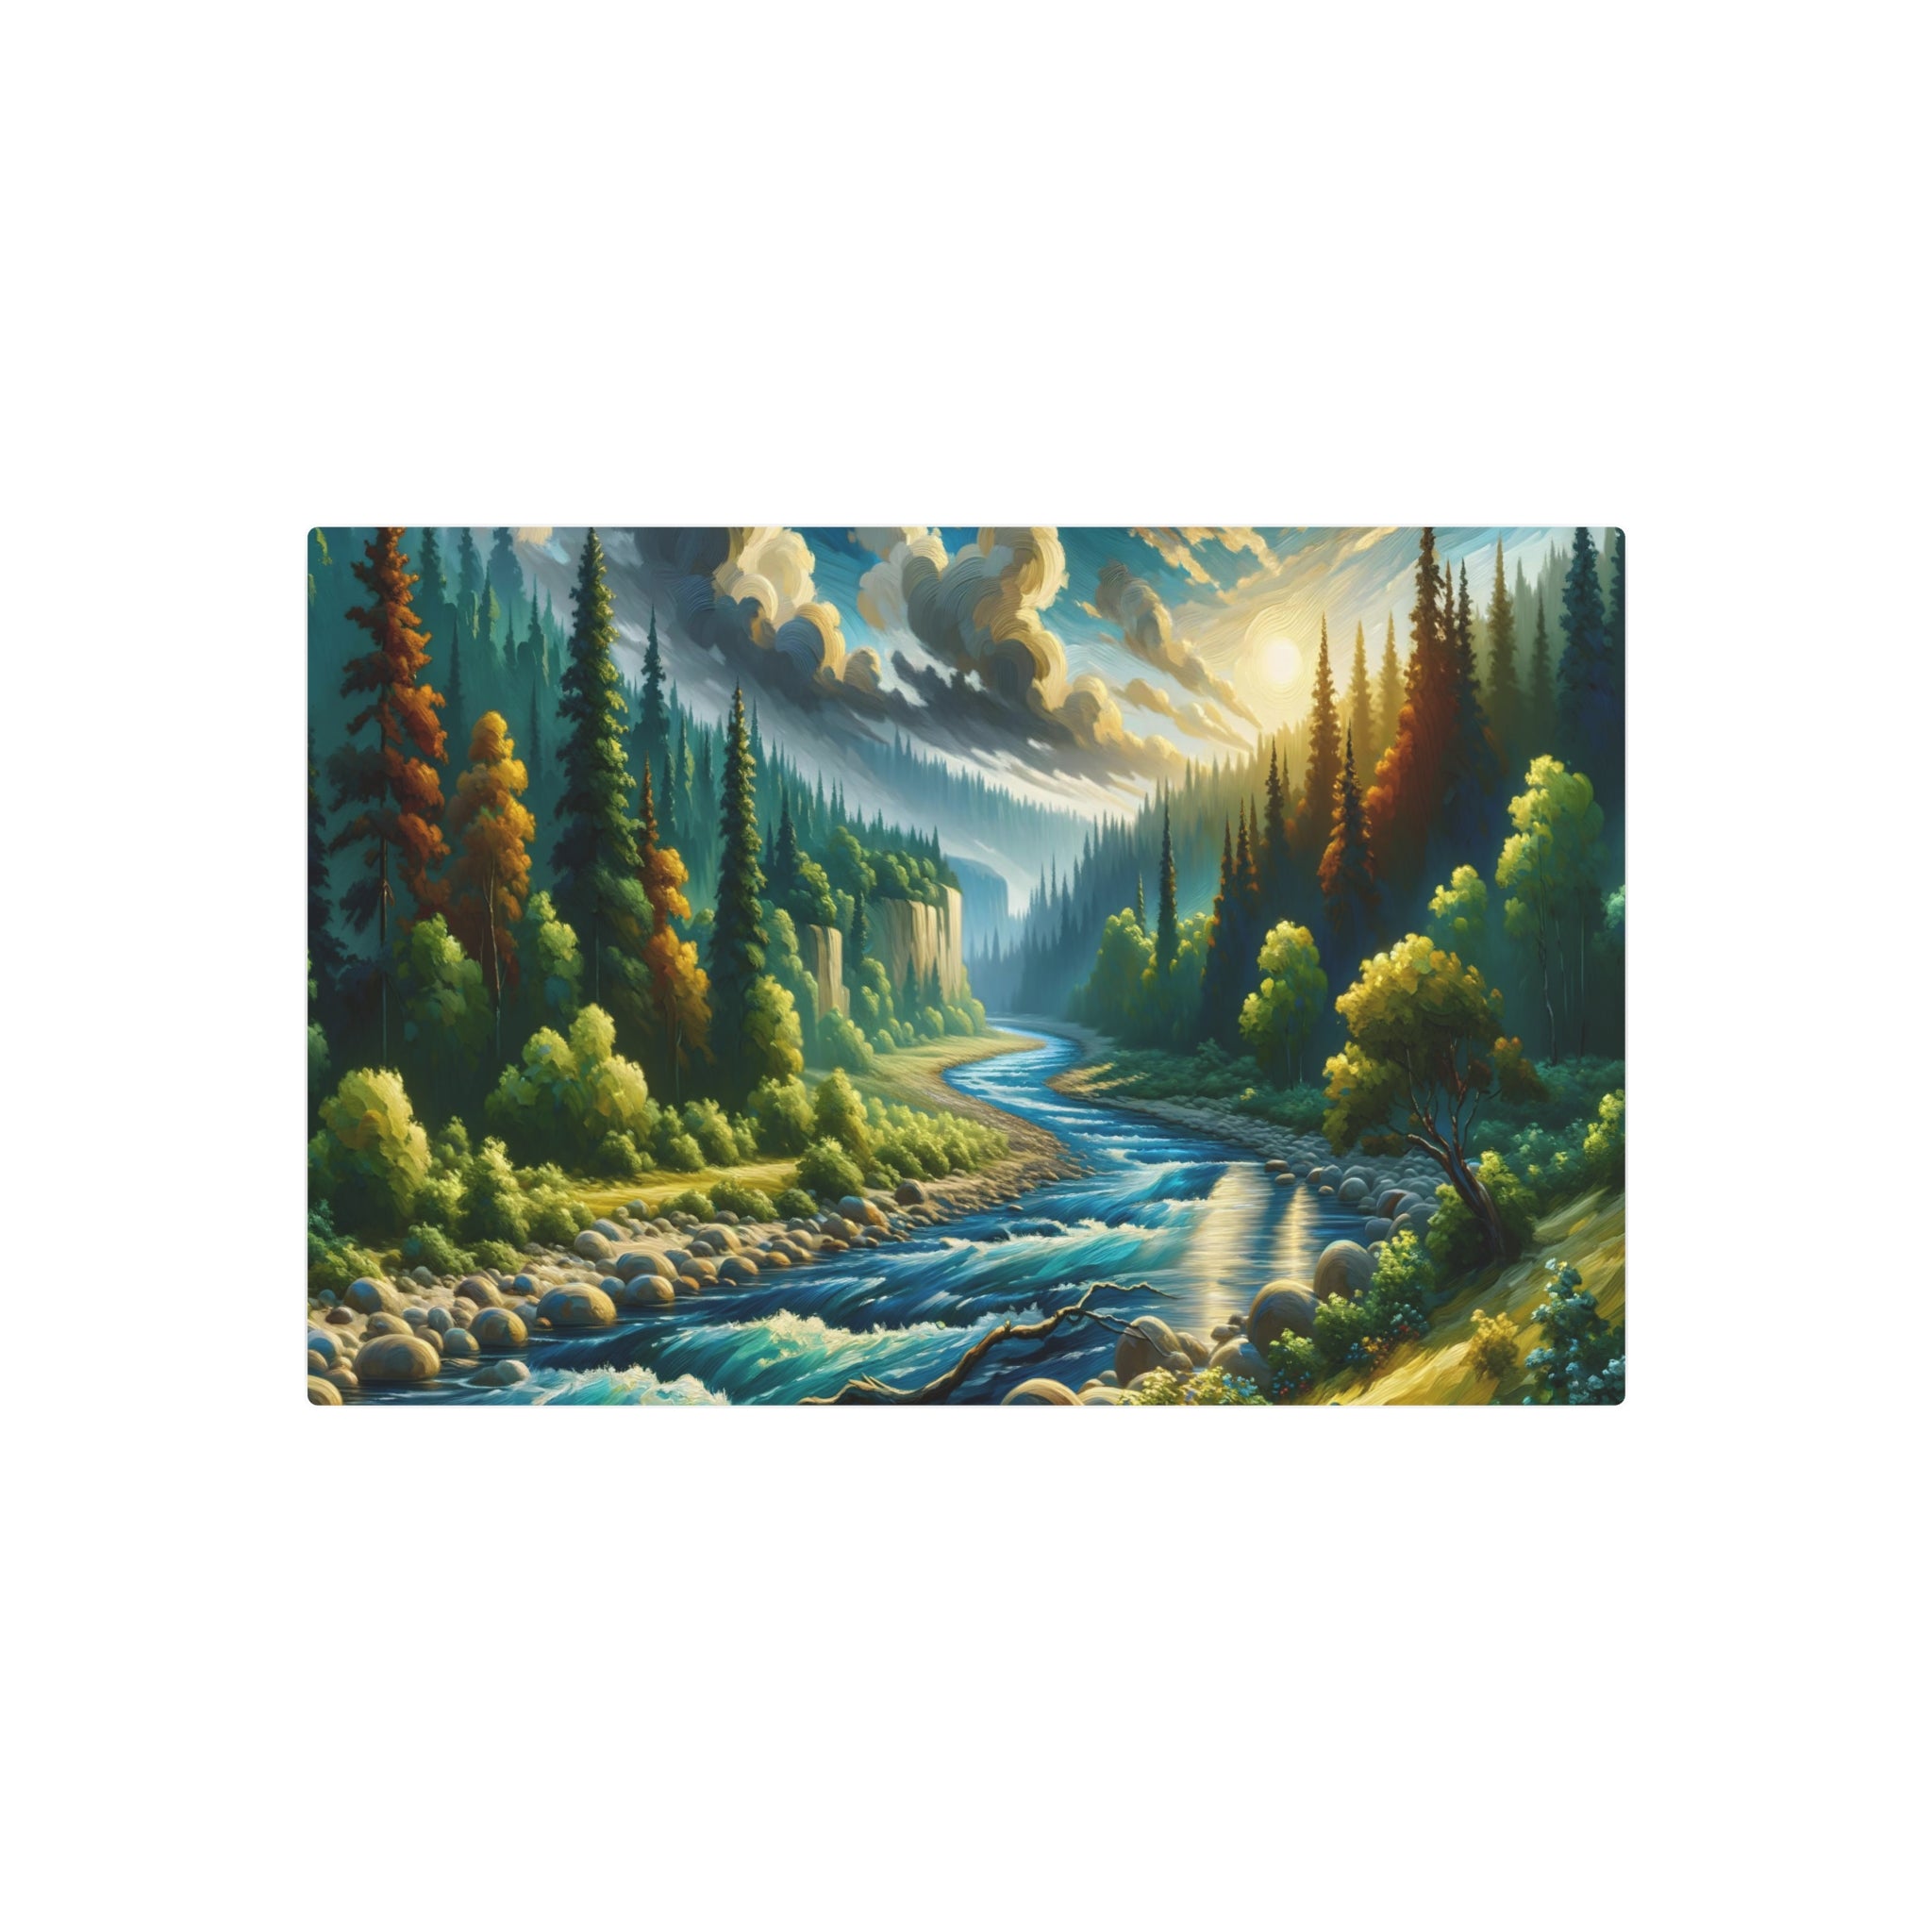 Metal Poster Art | "Vivid Post-Impressionism Art - Bold Colored Forest Landscape with River Flow"